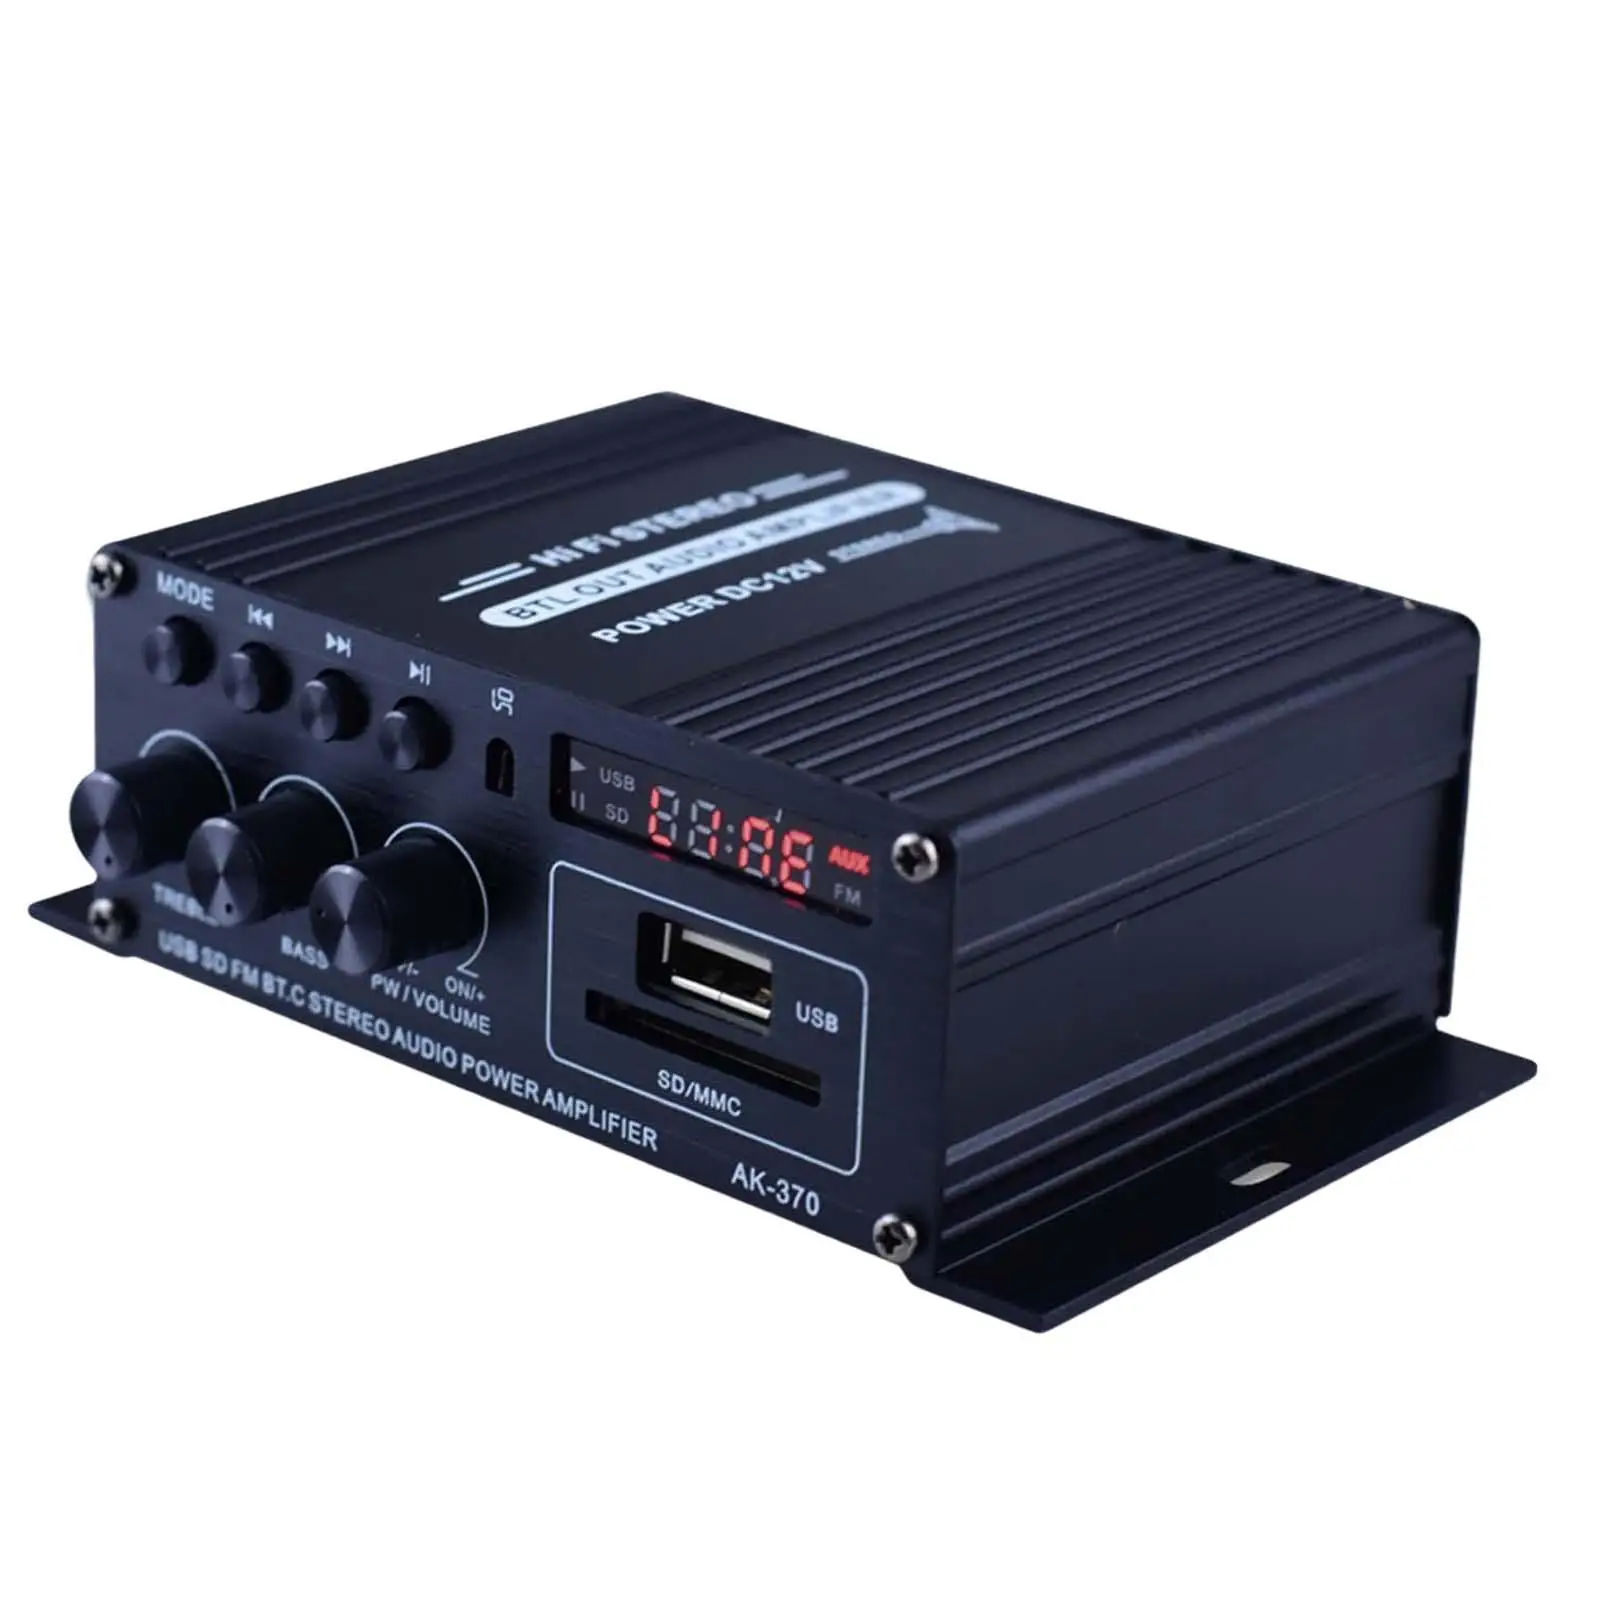 AK-370 Bluetooth Amplifier for Car Home Bar Party Bluetooth 5.0 USB SD BT FM Audio Power Amplifier Mini HiFi Stereo Amp Speaker